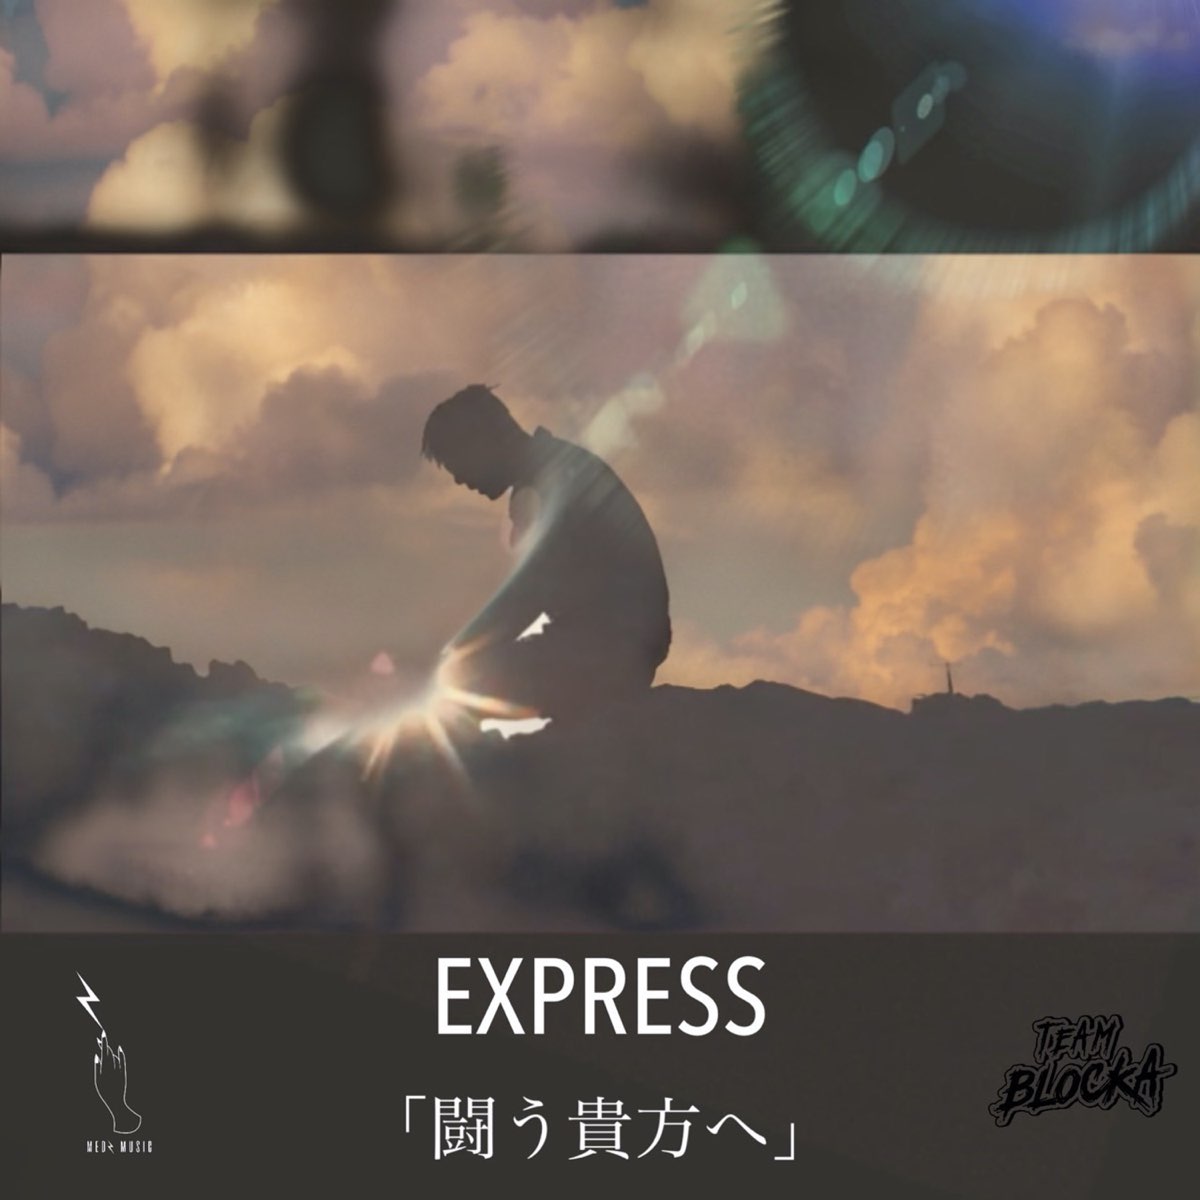 Tatakau Anatahe Single By Express On Apple Music